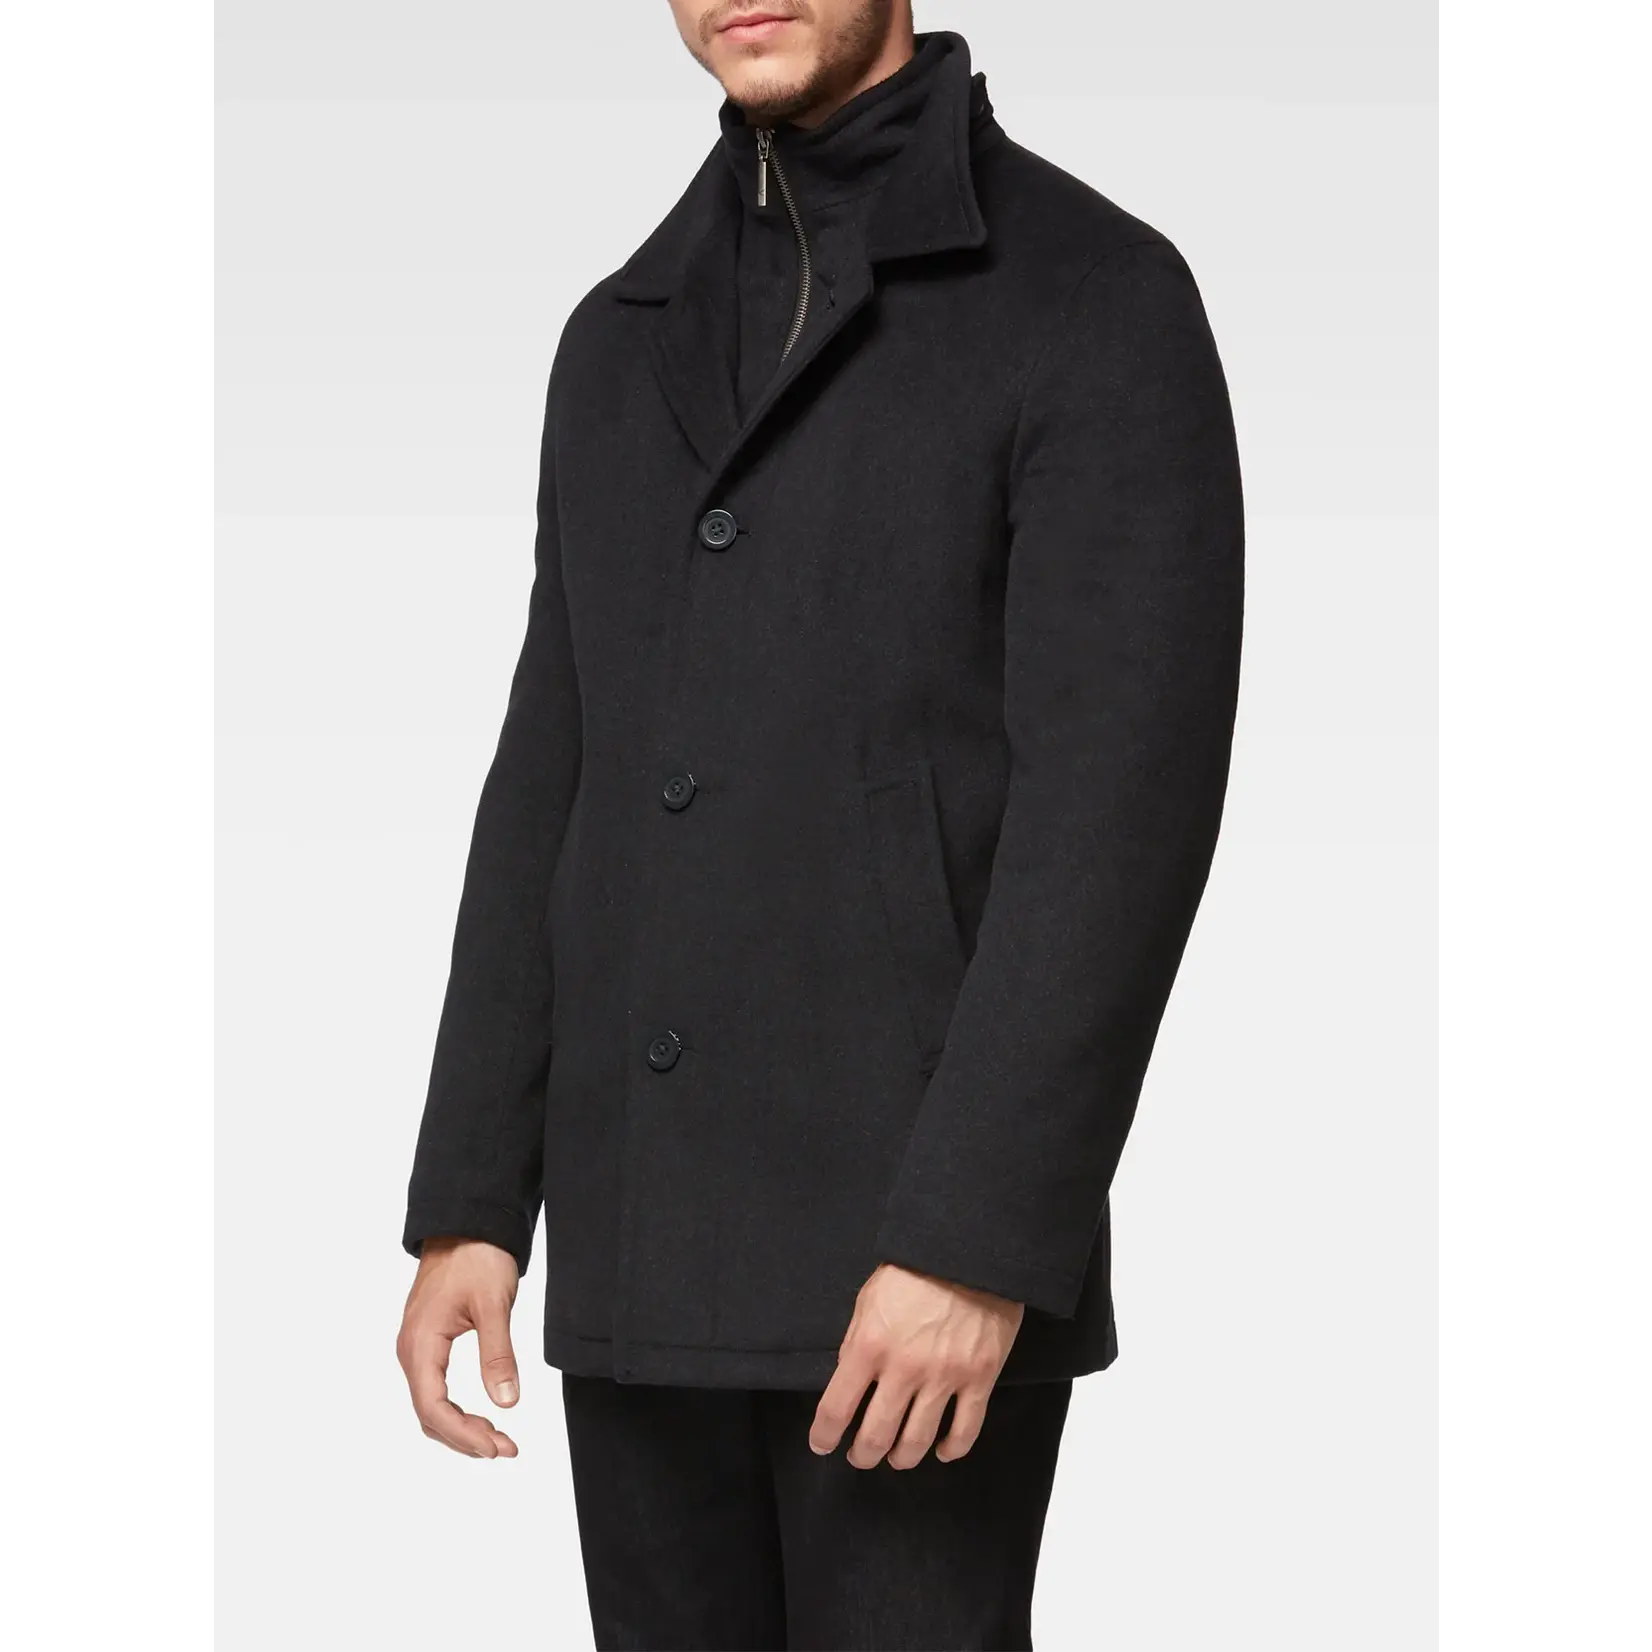 Vincent D'Amerique Vincent D'Amerique Mens dress jacket/over coat with zip off lining, jackets, coats